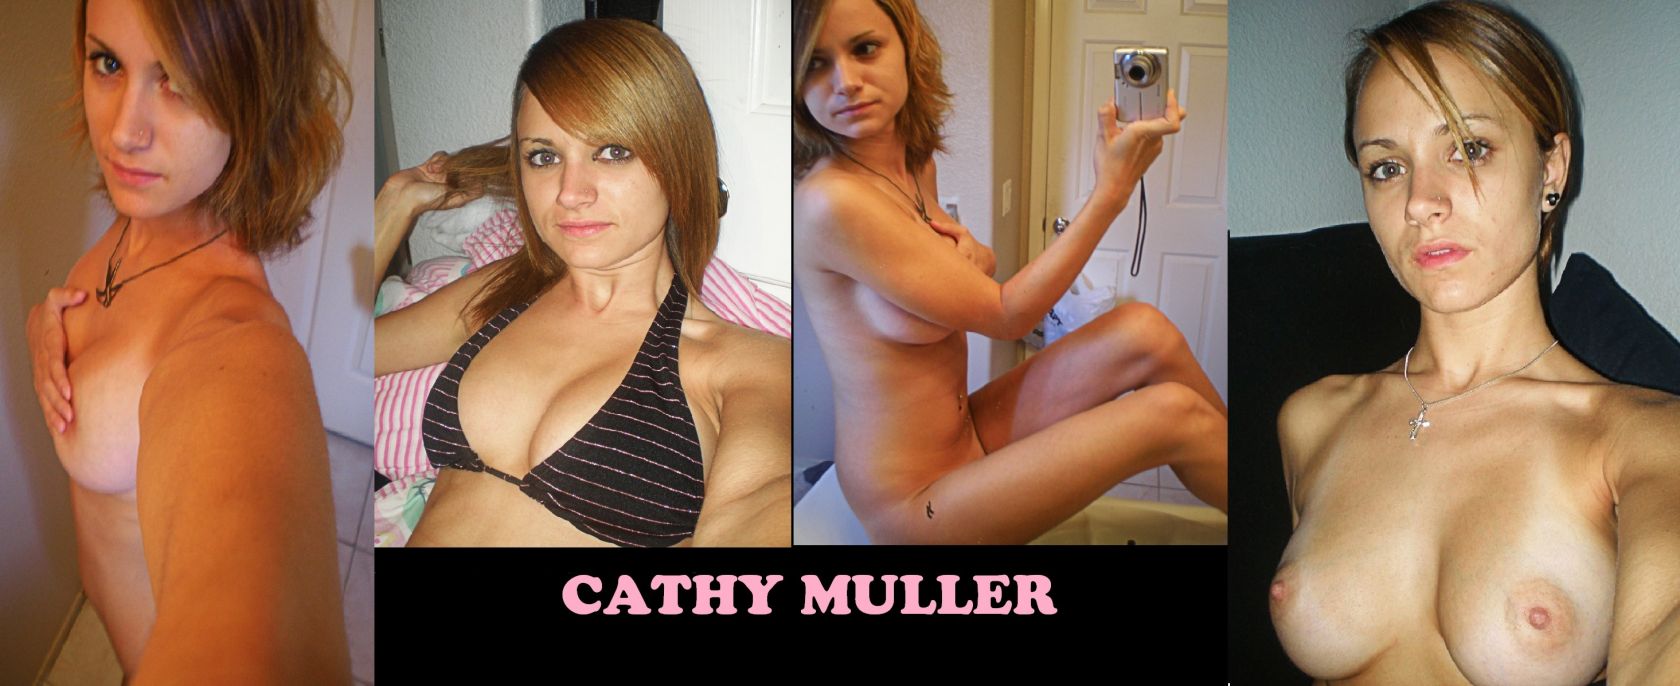 Cathy Muller (32)